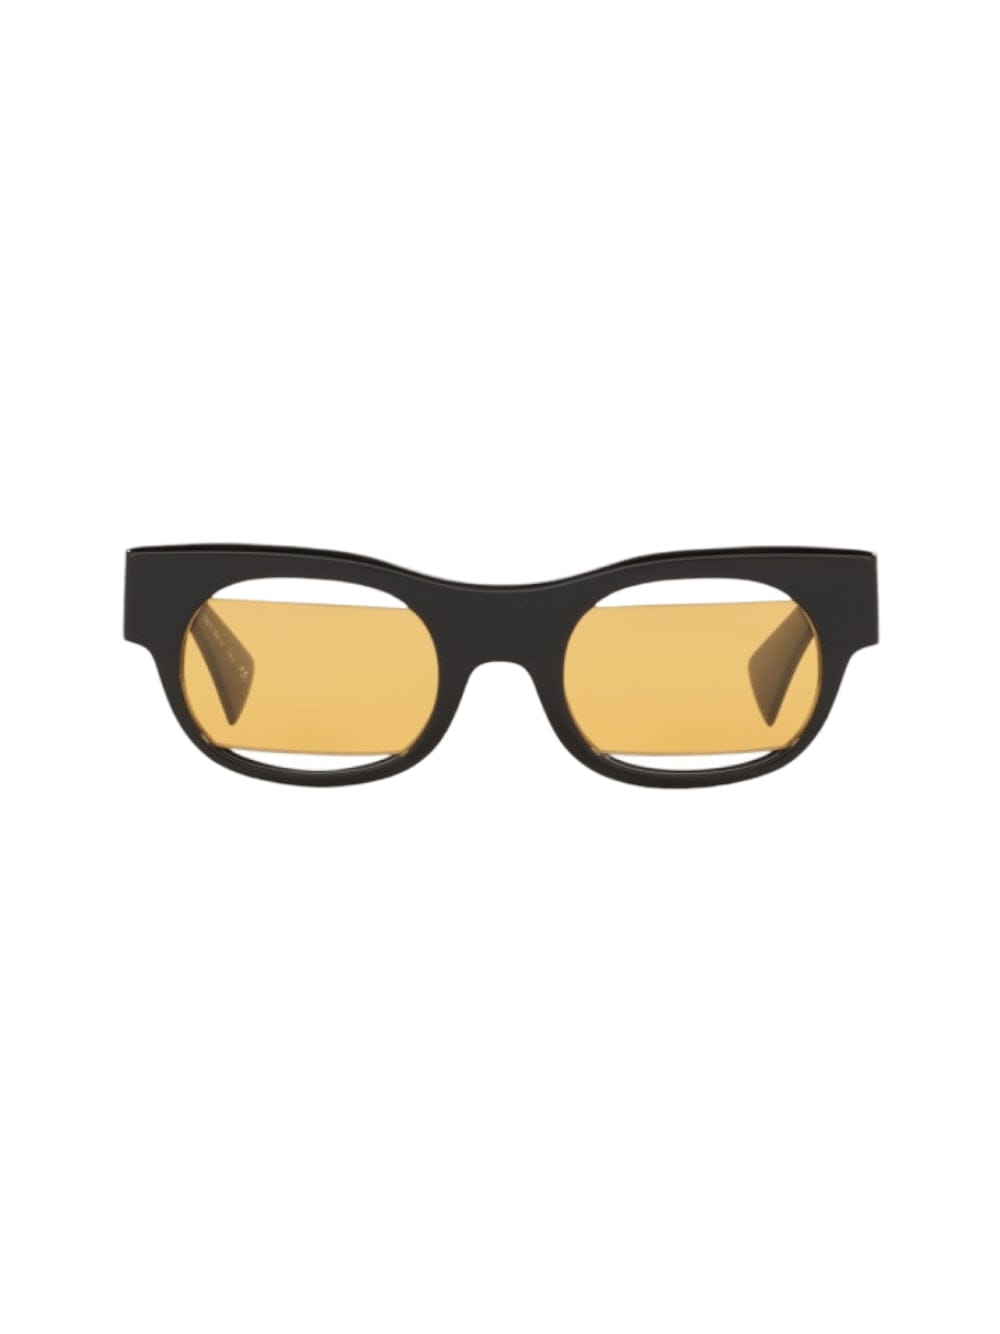 Alain Mikli Jeremy Scott - 5059 - Black Sunglasses